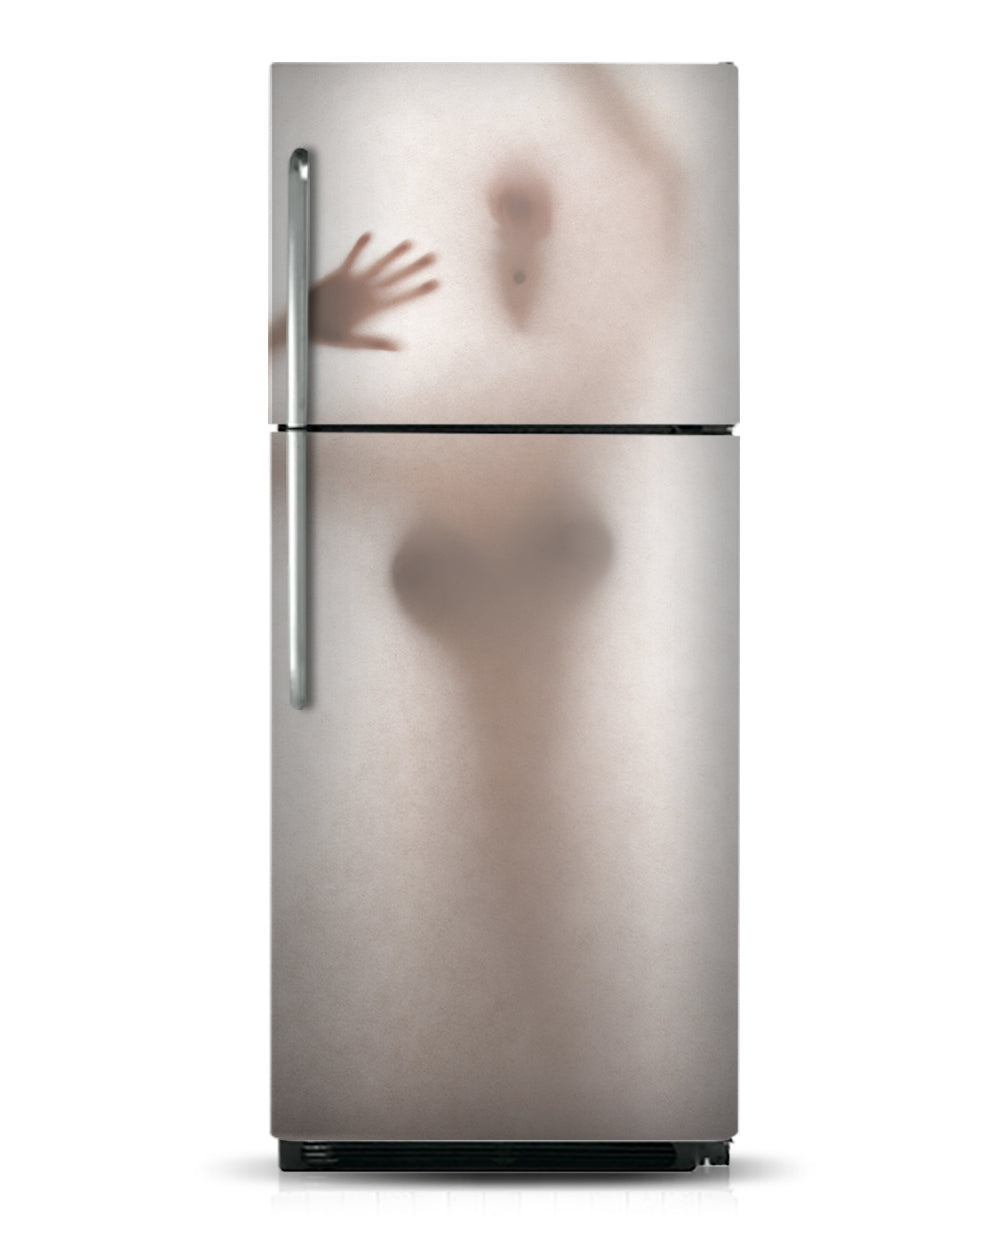 She Is - Magnetic Refrigerator Skins Kudu Magnets